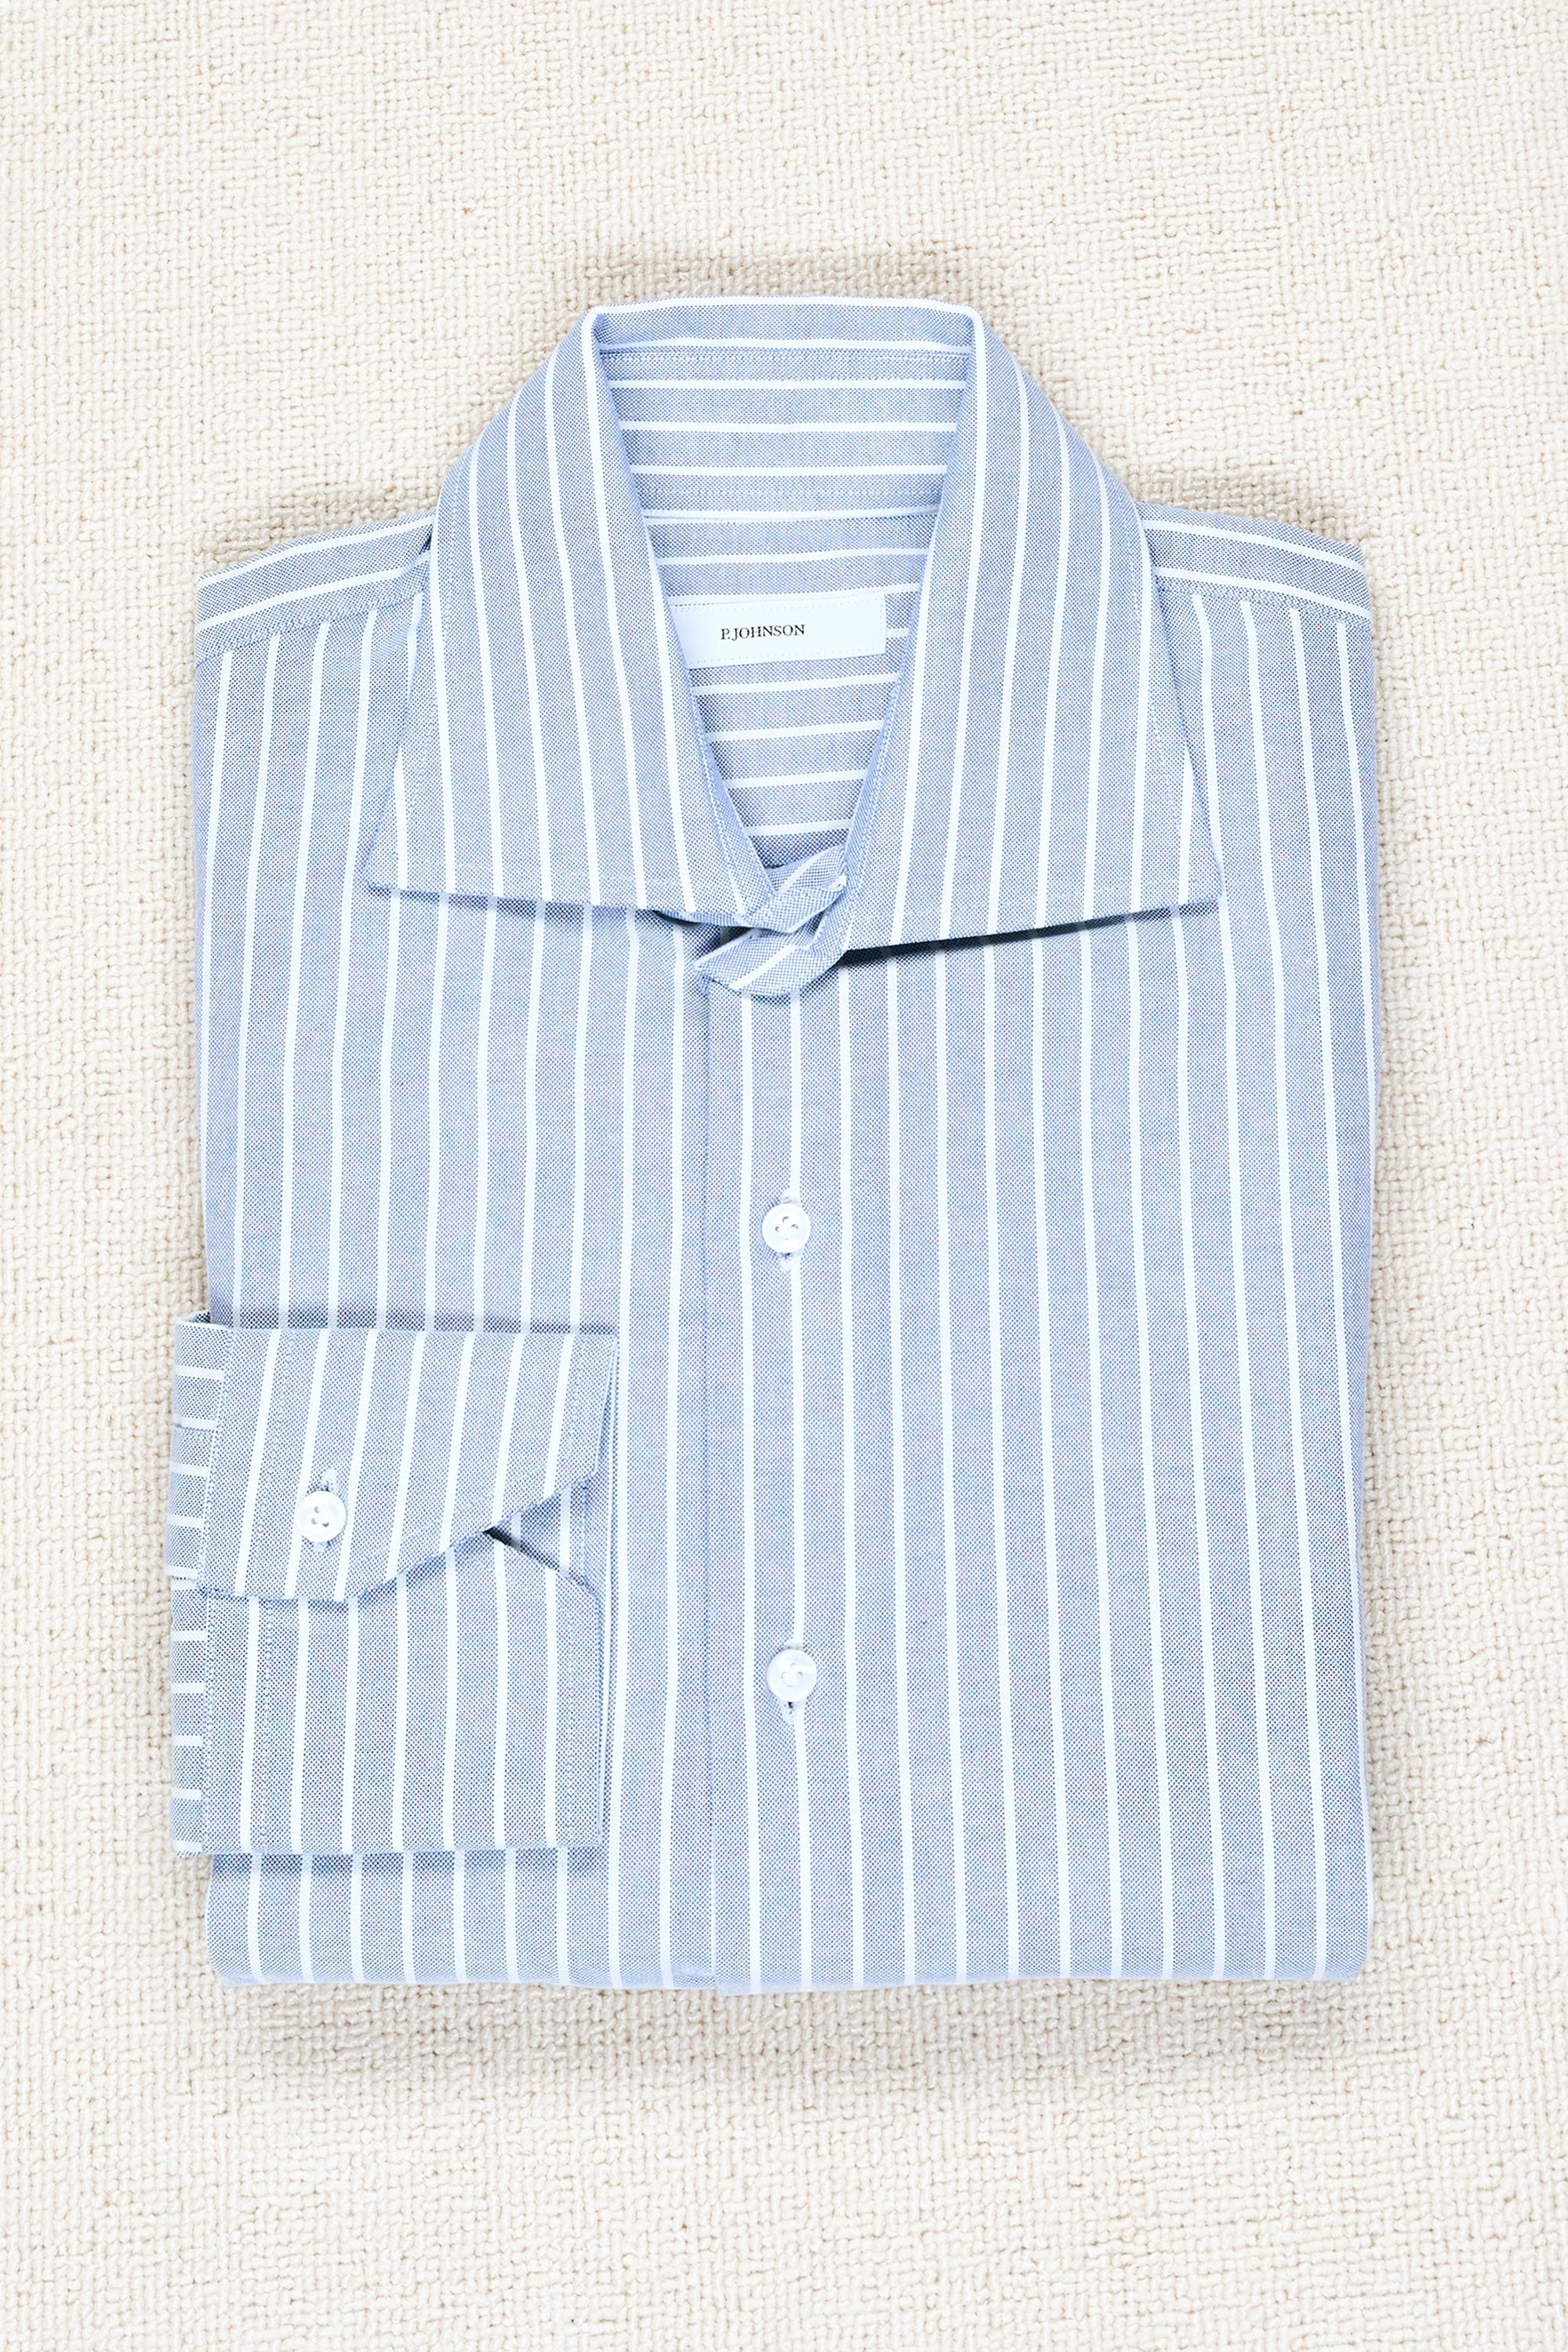 P. Johnson Blue with White Narrow Stripe Cotton Spread Collar Shirt